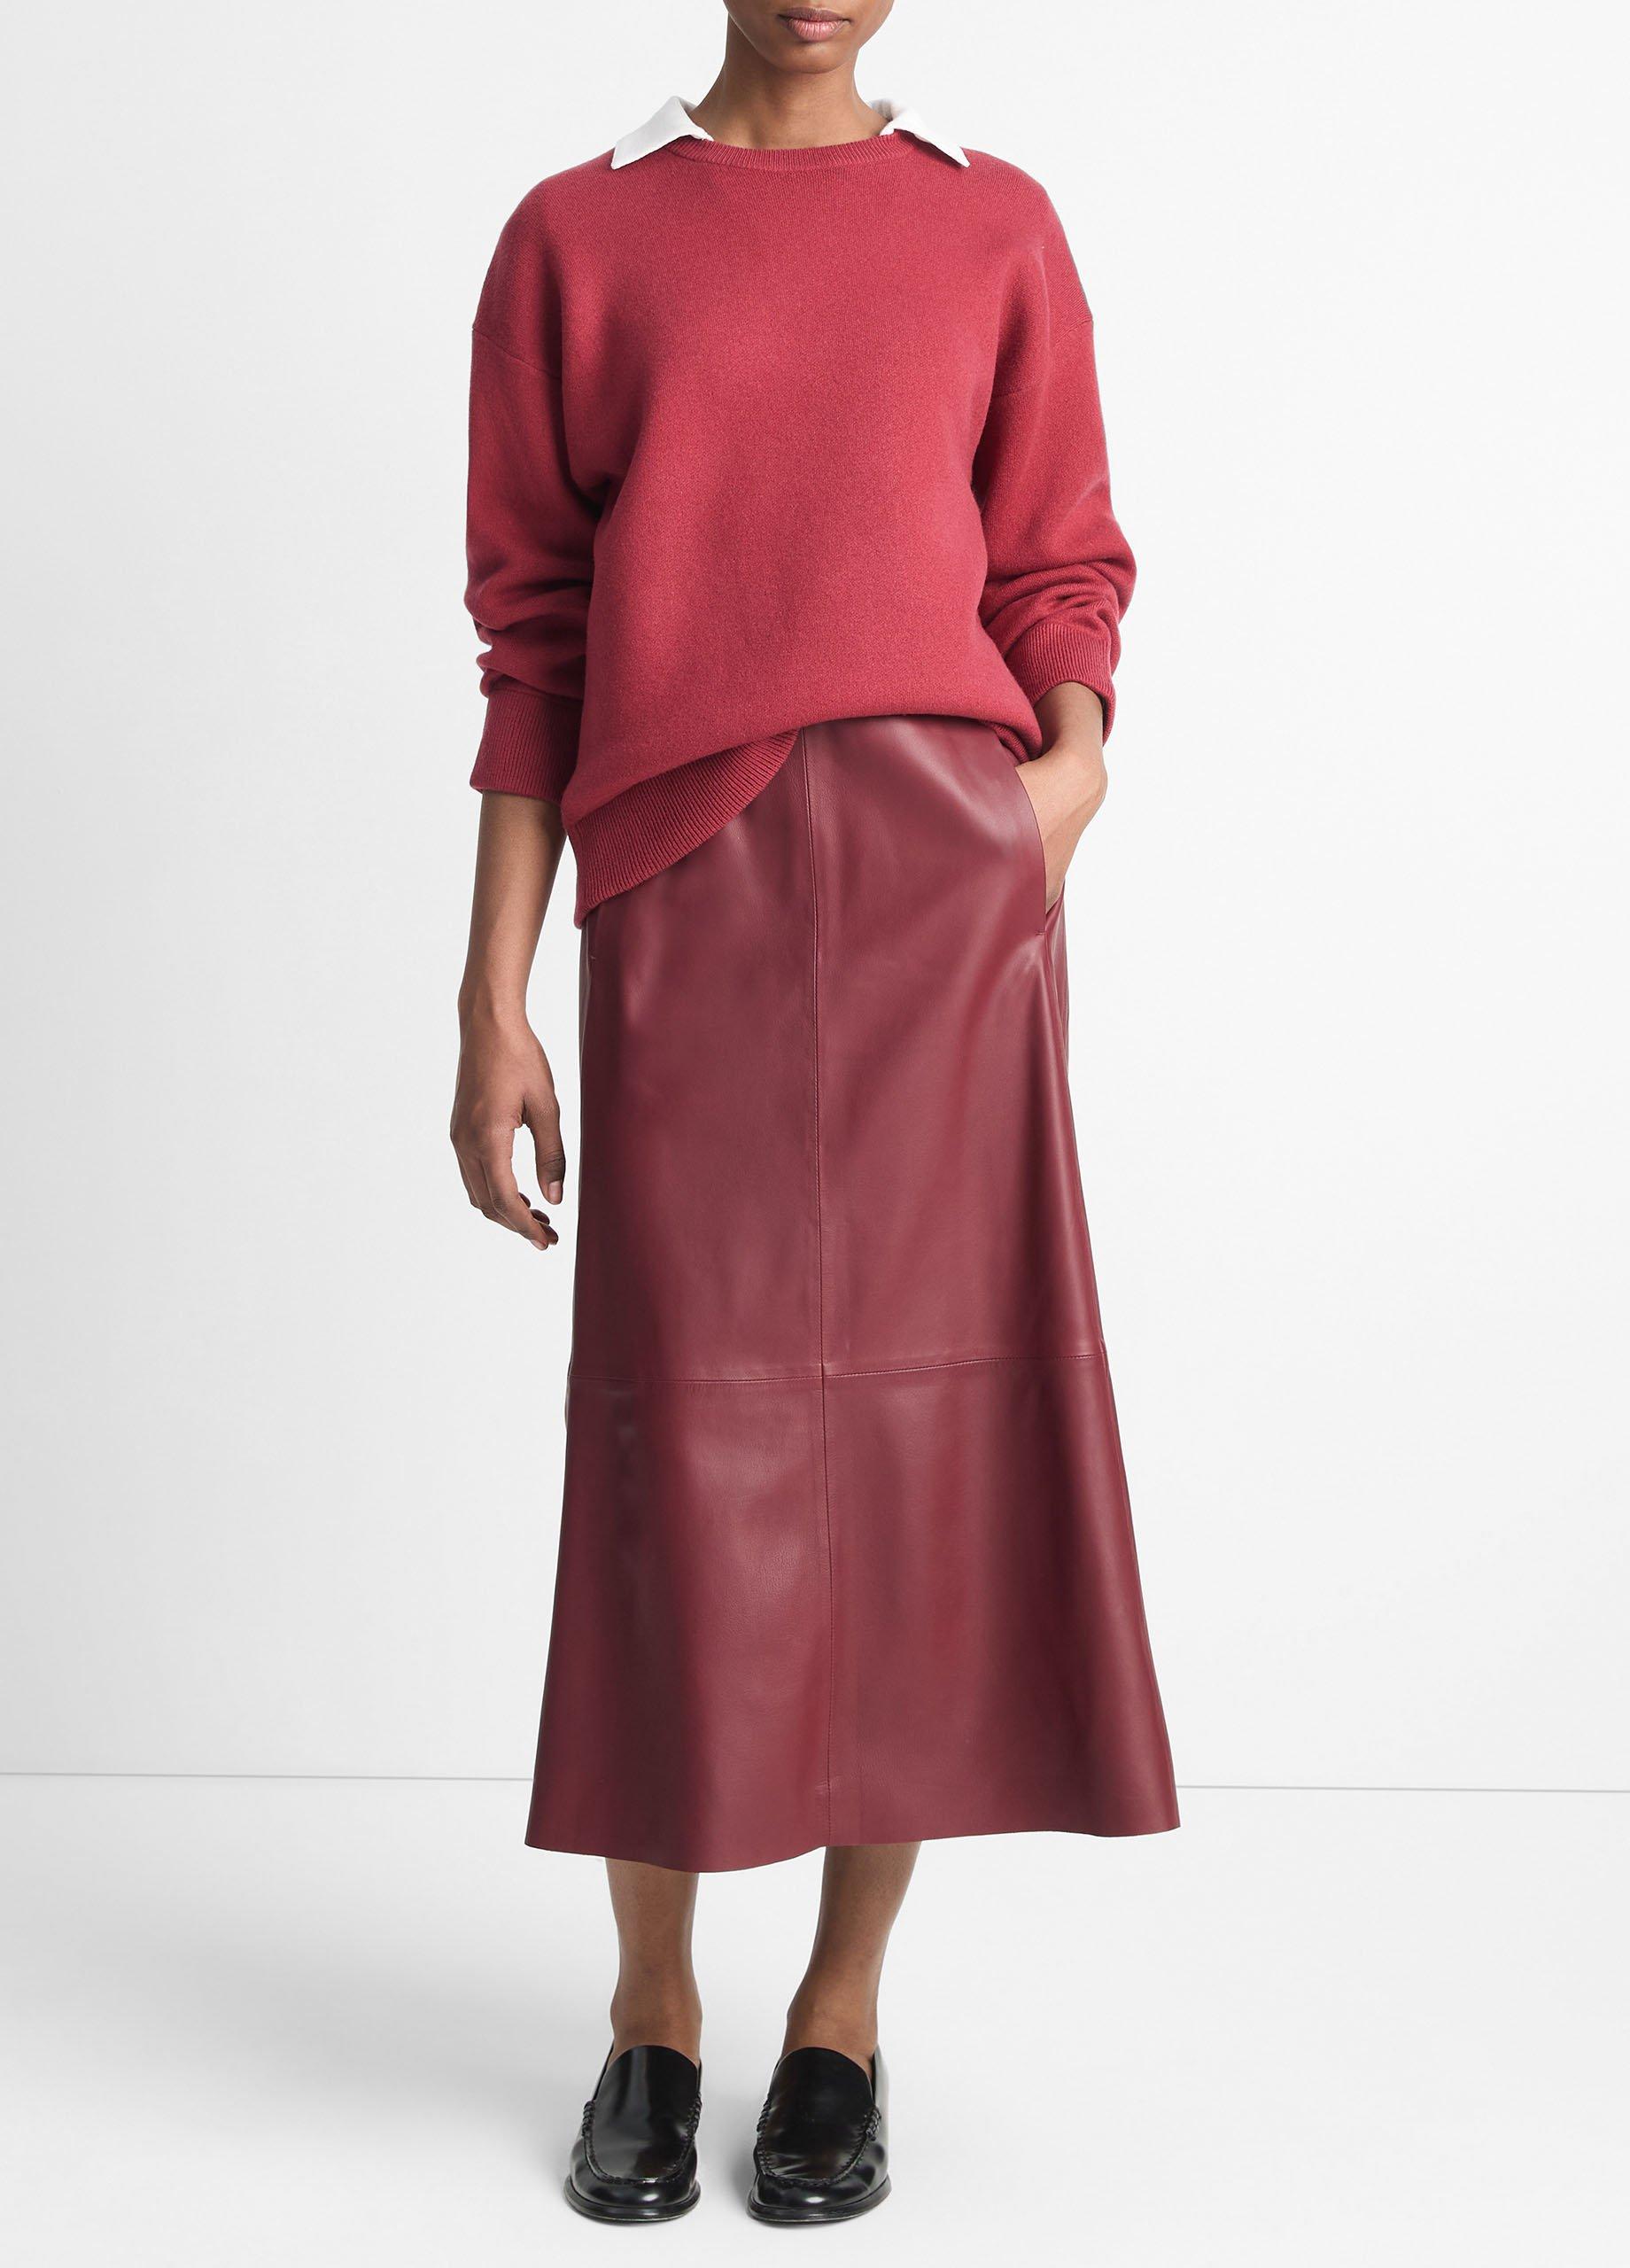 Gathered Leather Mid-Rise Skirt, Dark Rasberry, Size XL Vince